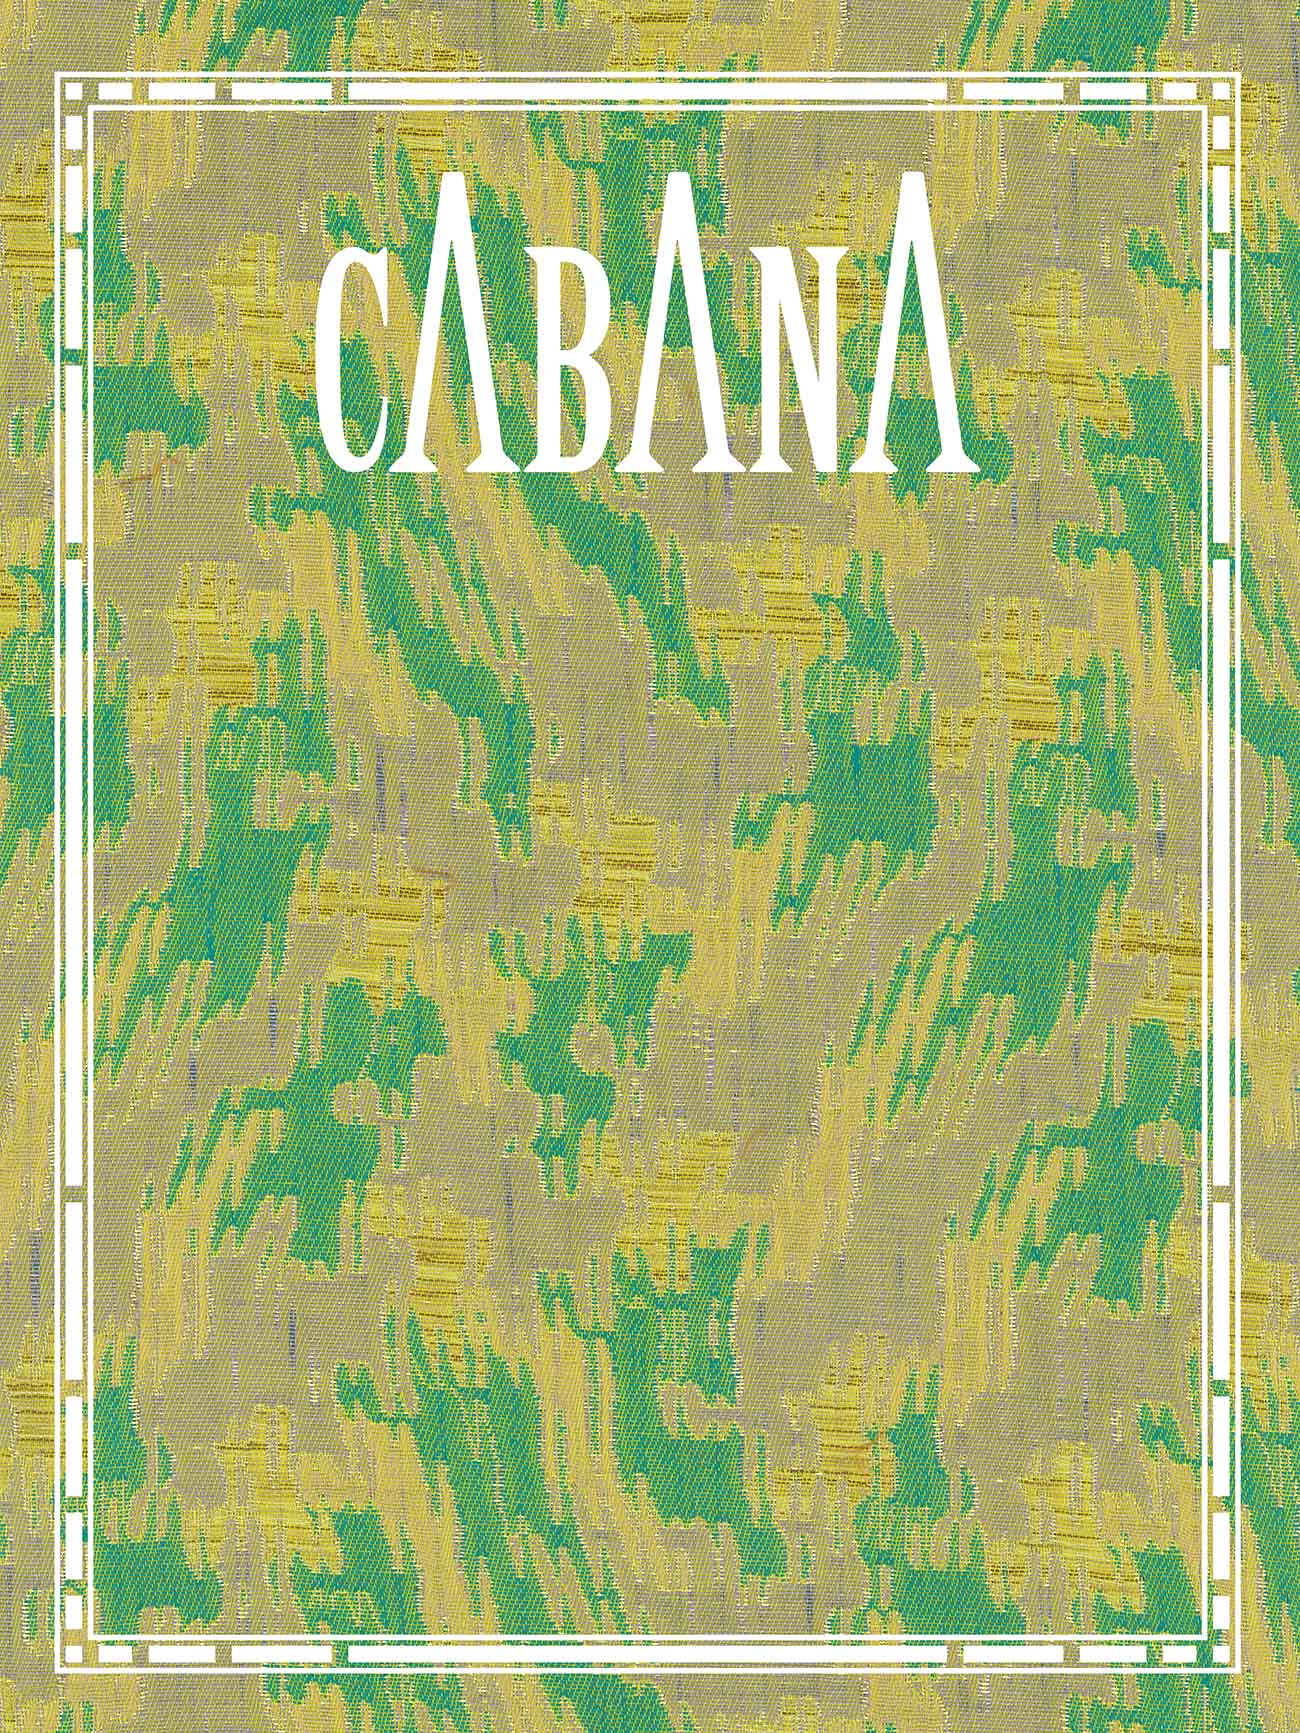 CABANA_Color_001.jpg